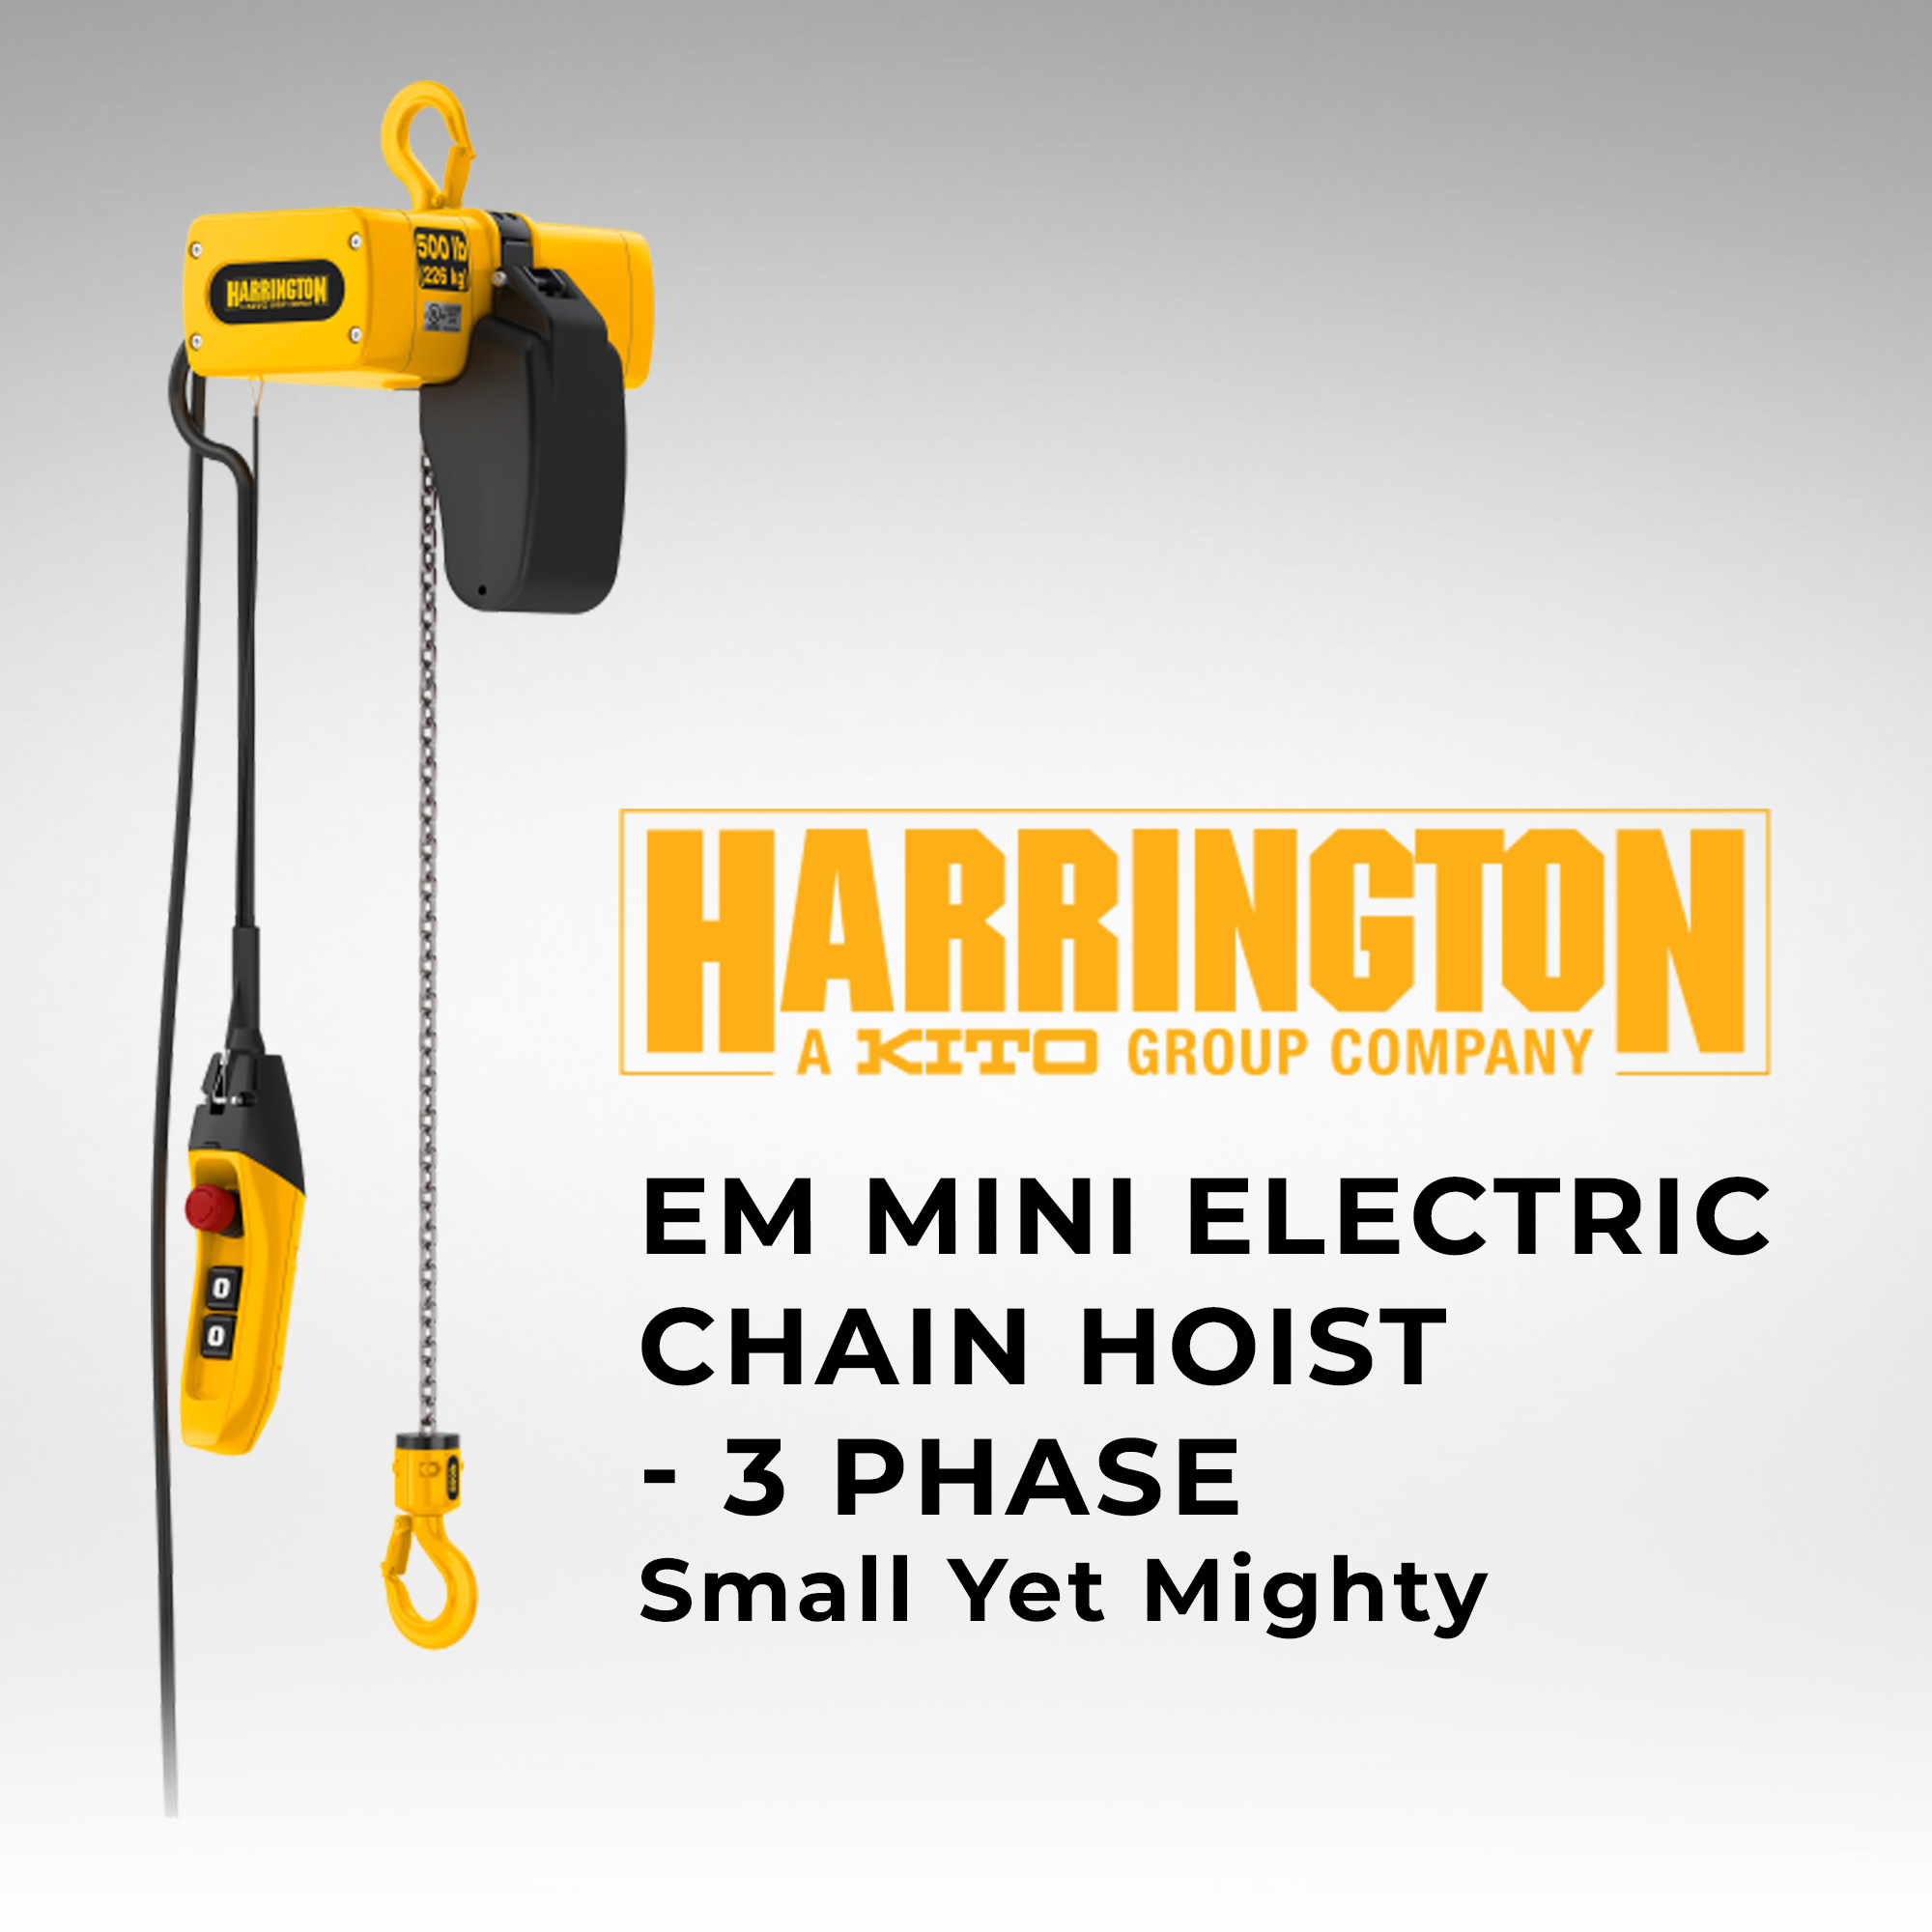 Harrington's EM Series three phase mini electric chain hoists